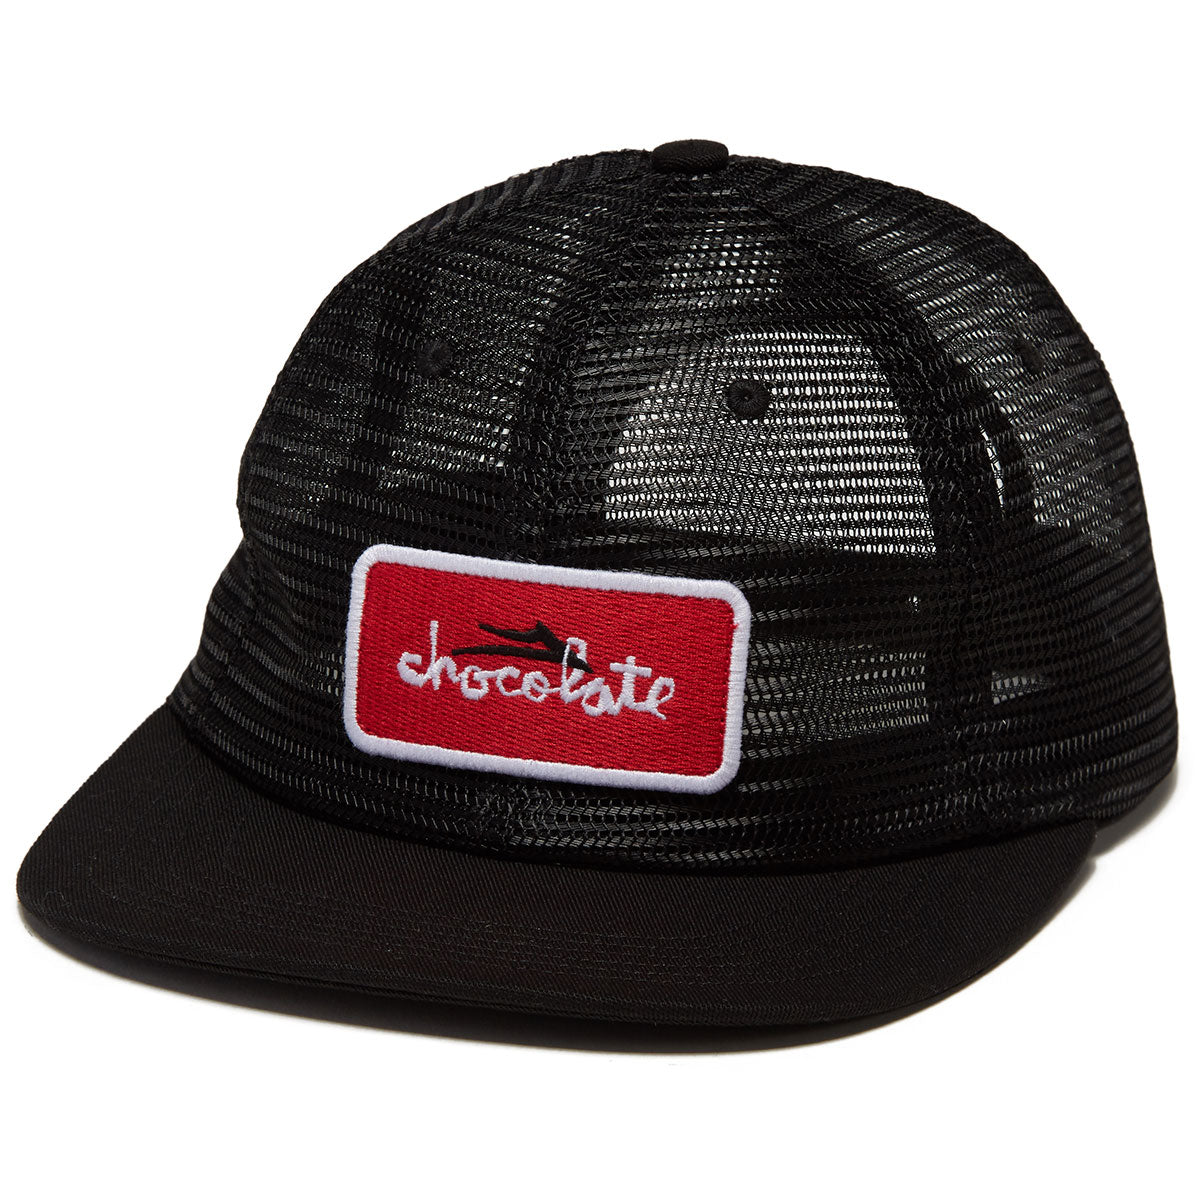 Lakai x Chocolate Petrol Mesh Snapback Hat - Black image 1